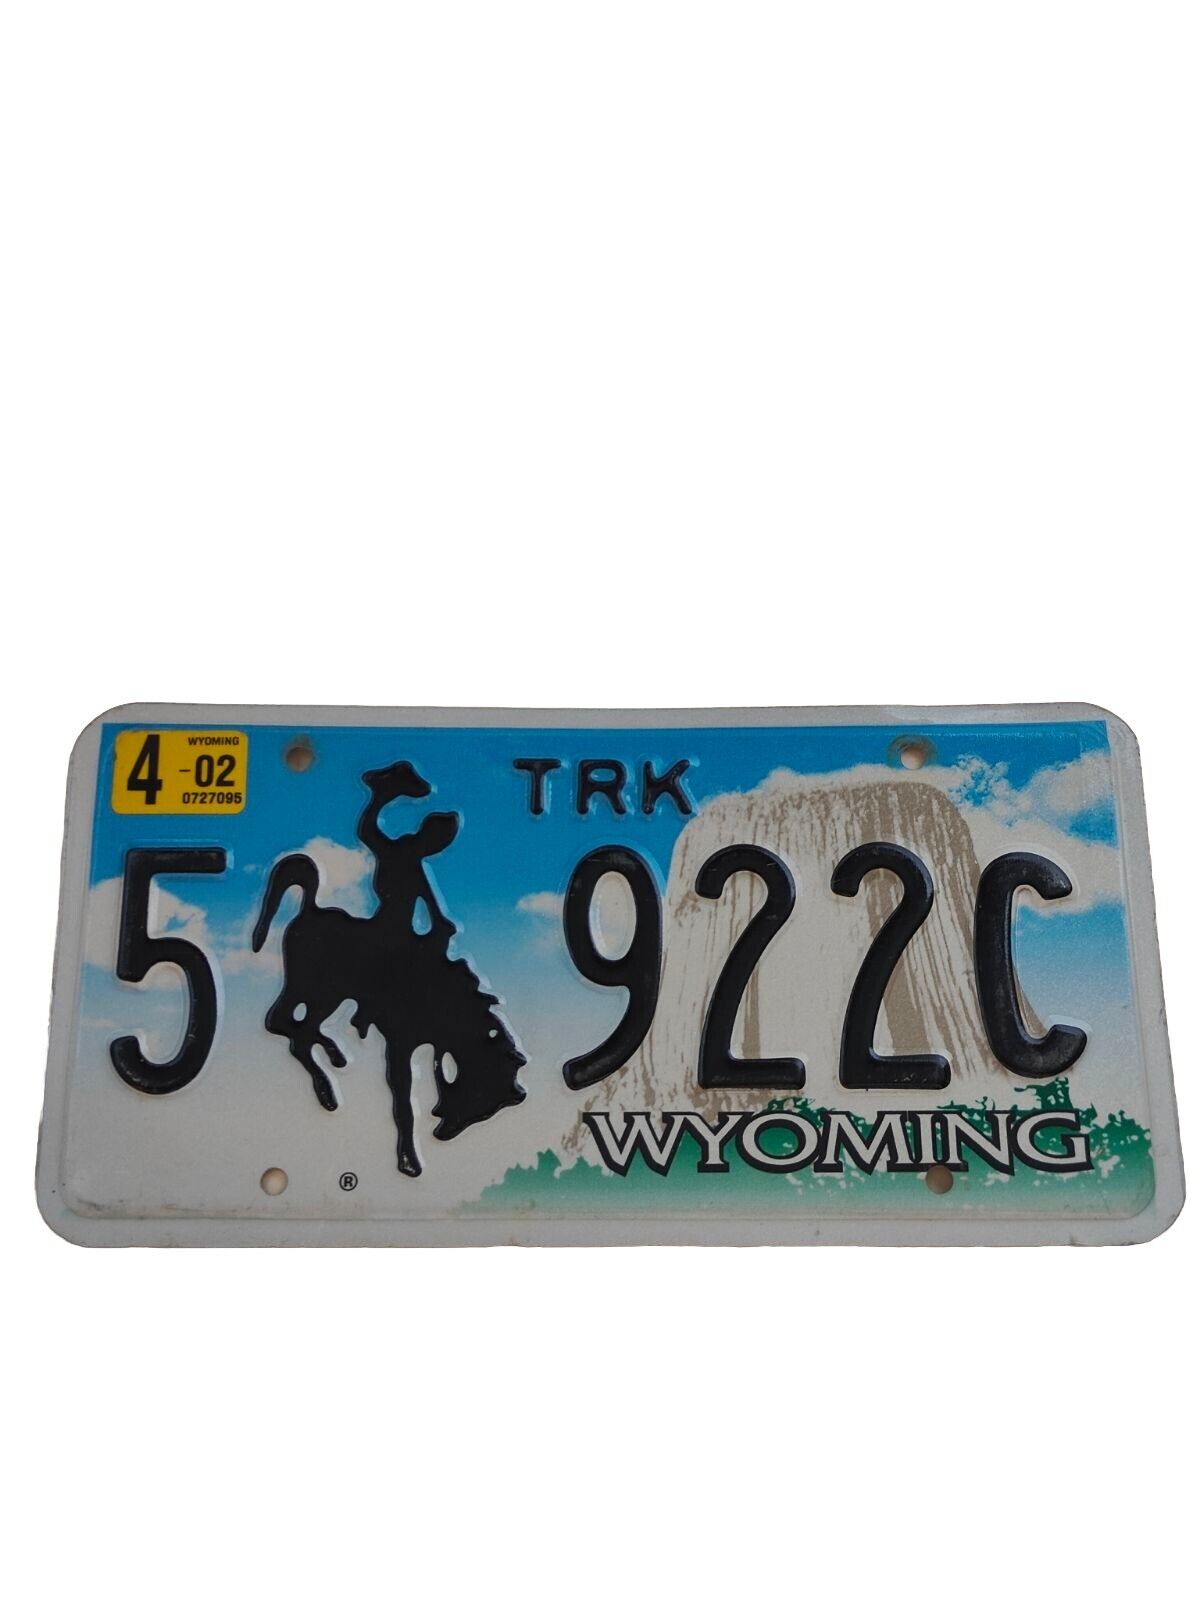 \'02 Wyoming Truck License Plate Cowboy Horse Blue Sky 5🏇922C Mancave Pub Garage